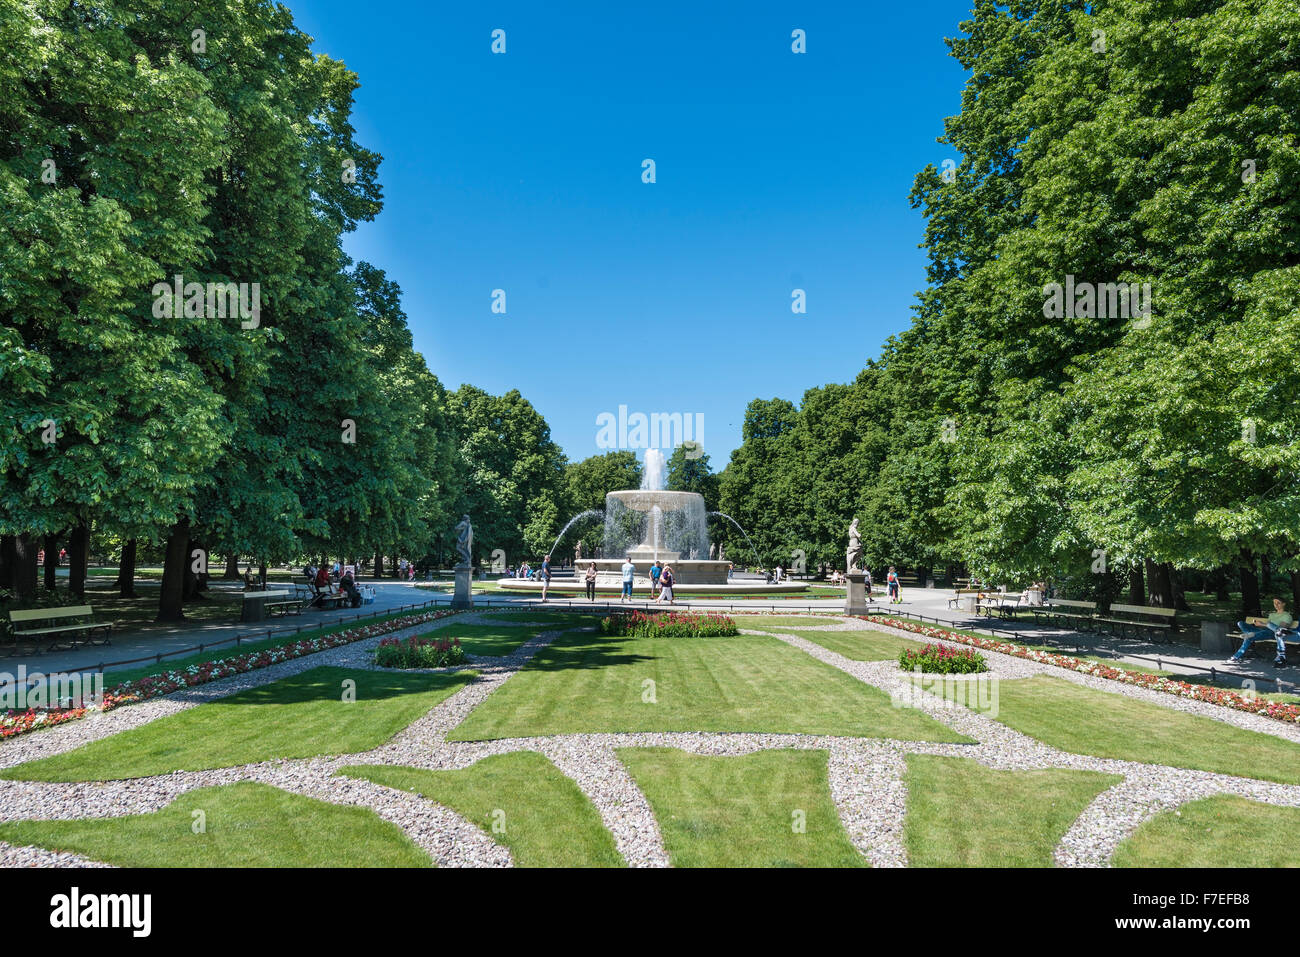 Ogród Saski Park, Pilsudski Square, historic centre, Warsaw, Mazovia Province, Poland Stock Photo